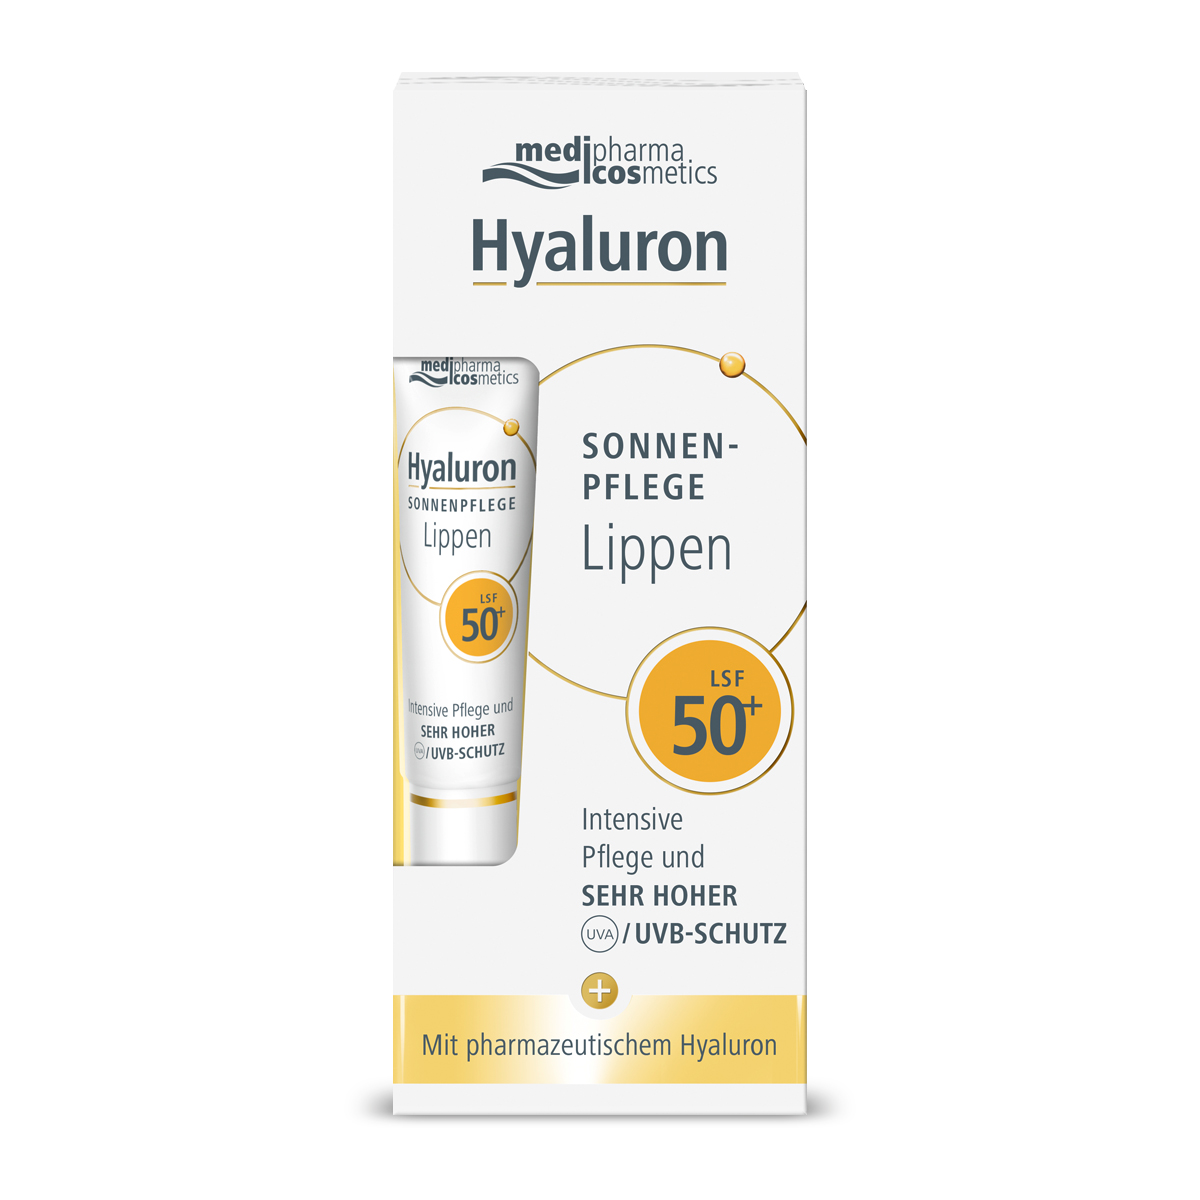 Медифарма Косметикс Солнцезащитный крем для губ SPF 50+, 7 мл (Medipharma Cosmetics, Hyaluron) фото 0